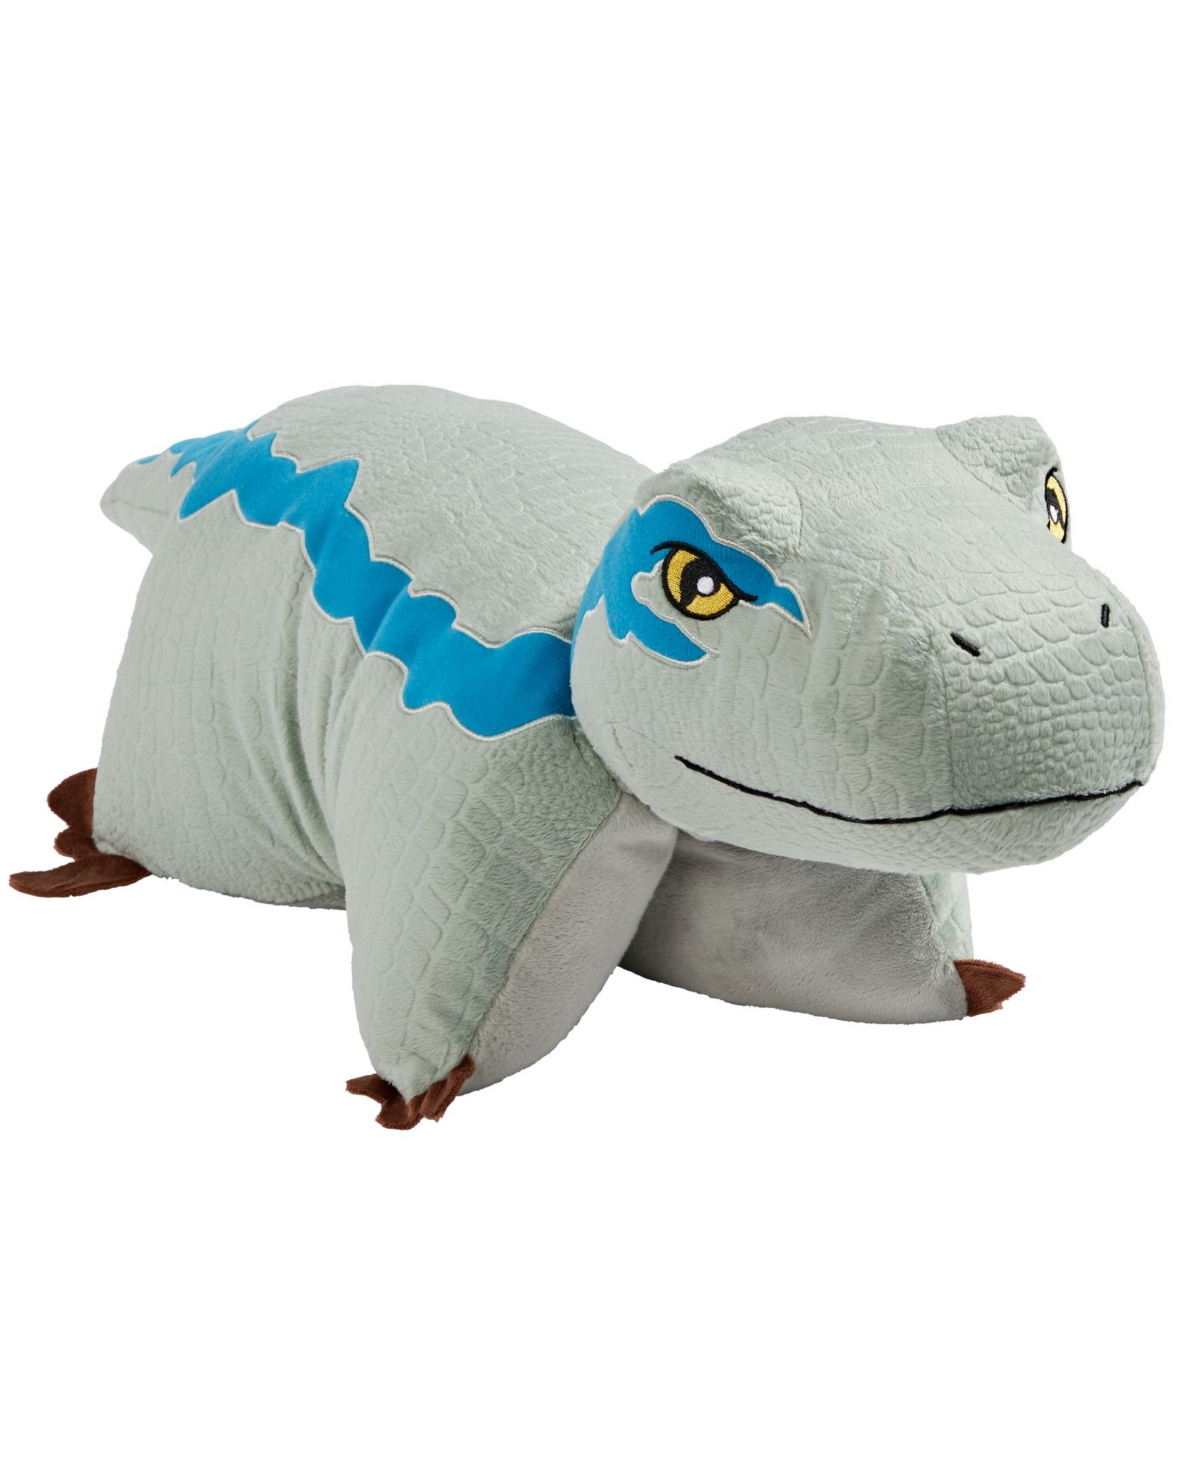 Pillow Pets Kids' National Boardcasting Company Universal Jurassic World Blue Stuffed Animal Plush Toy